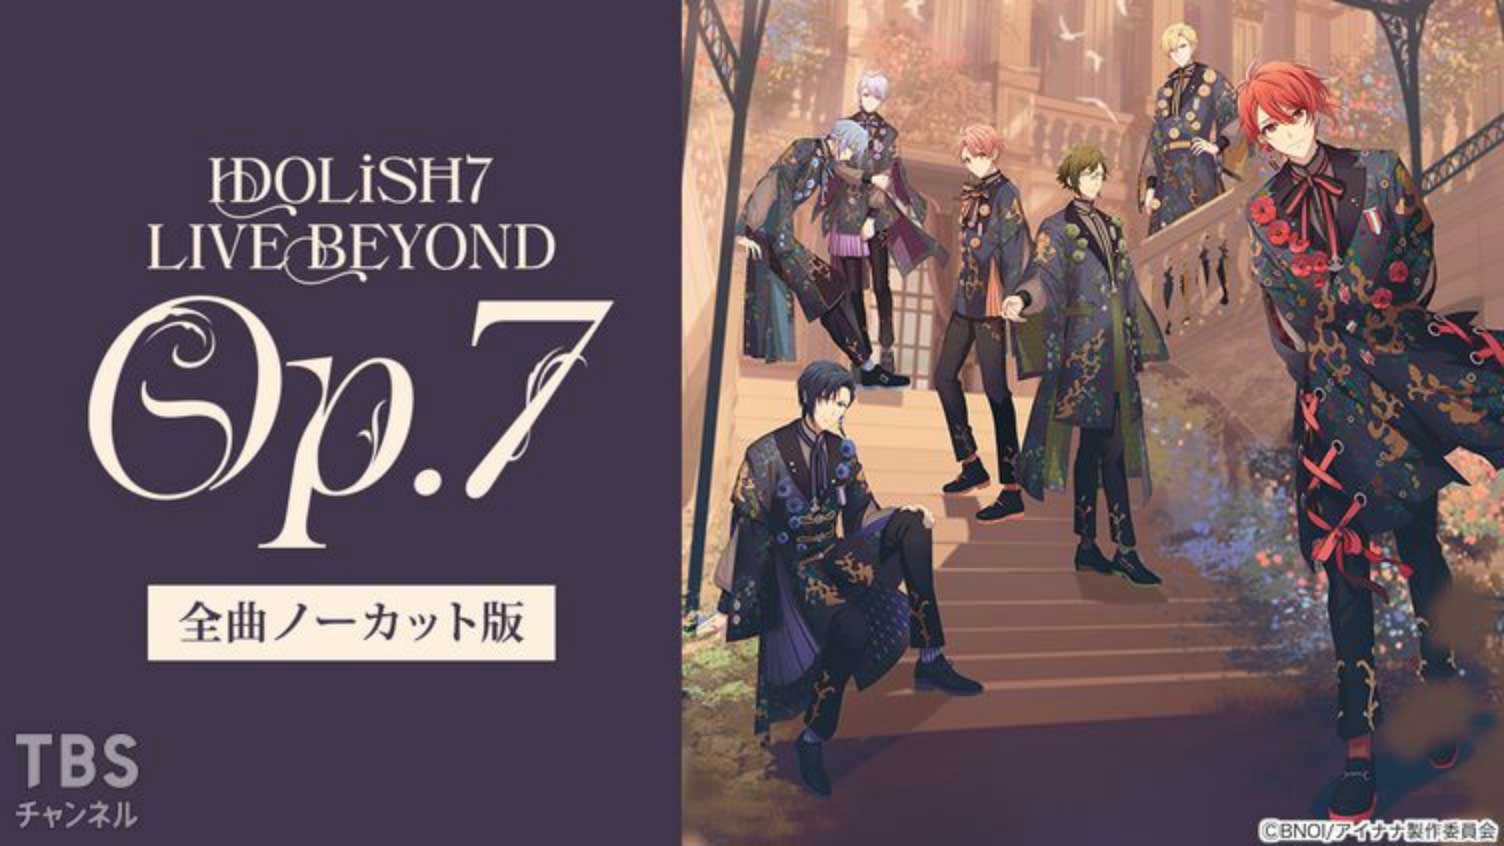 IDOLiSH7 LIVE BEYOND “Op.7”全曲ノーカット版